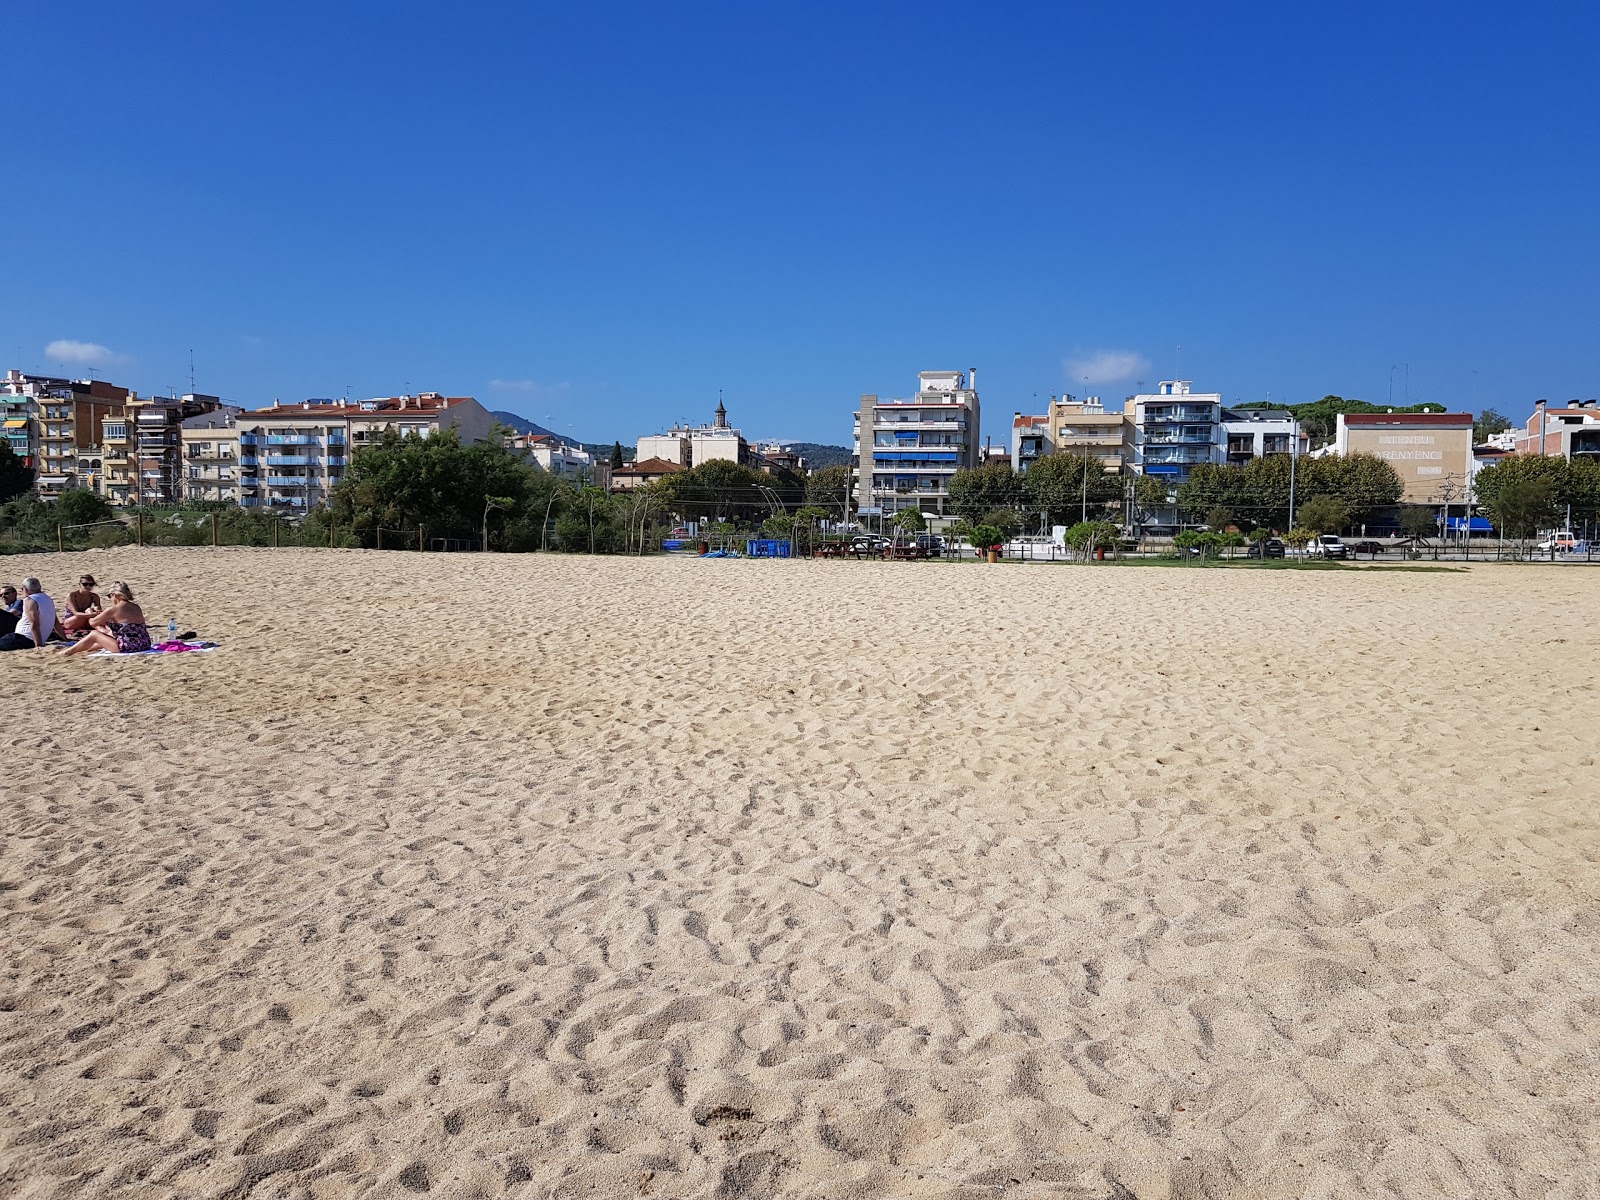 Foto di Playa de la Picordia con una superficie del sabbia luminosa